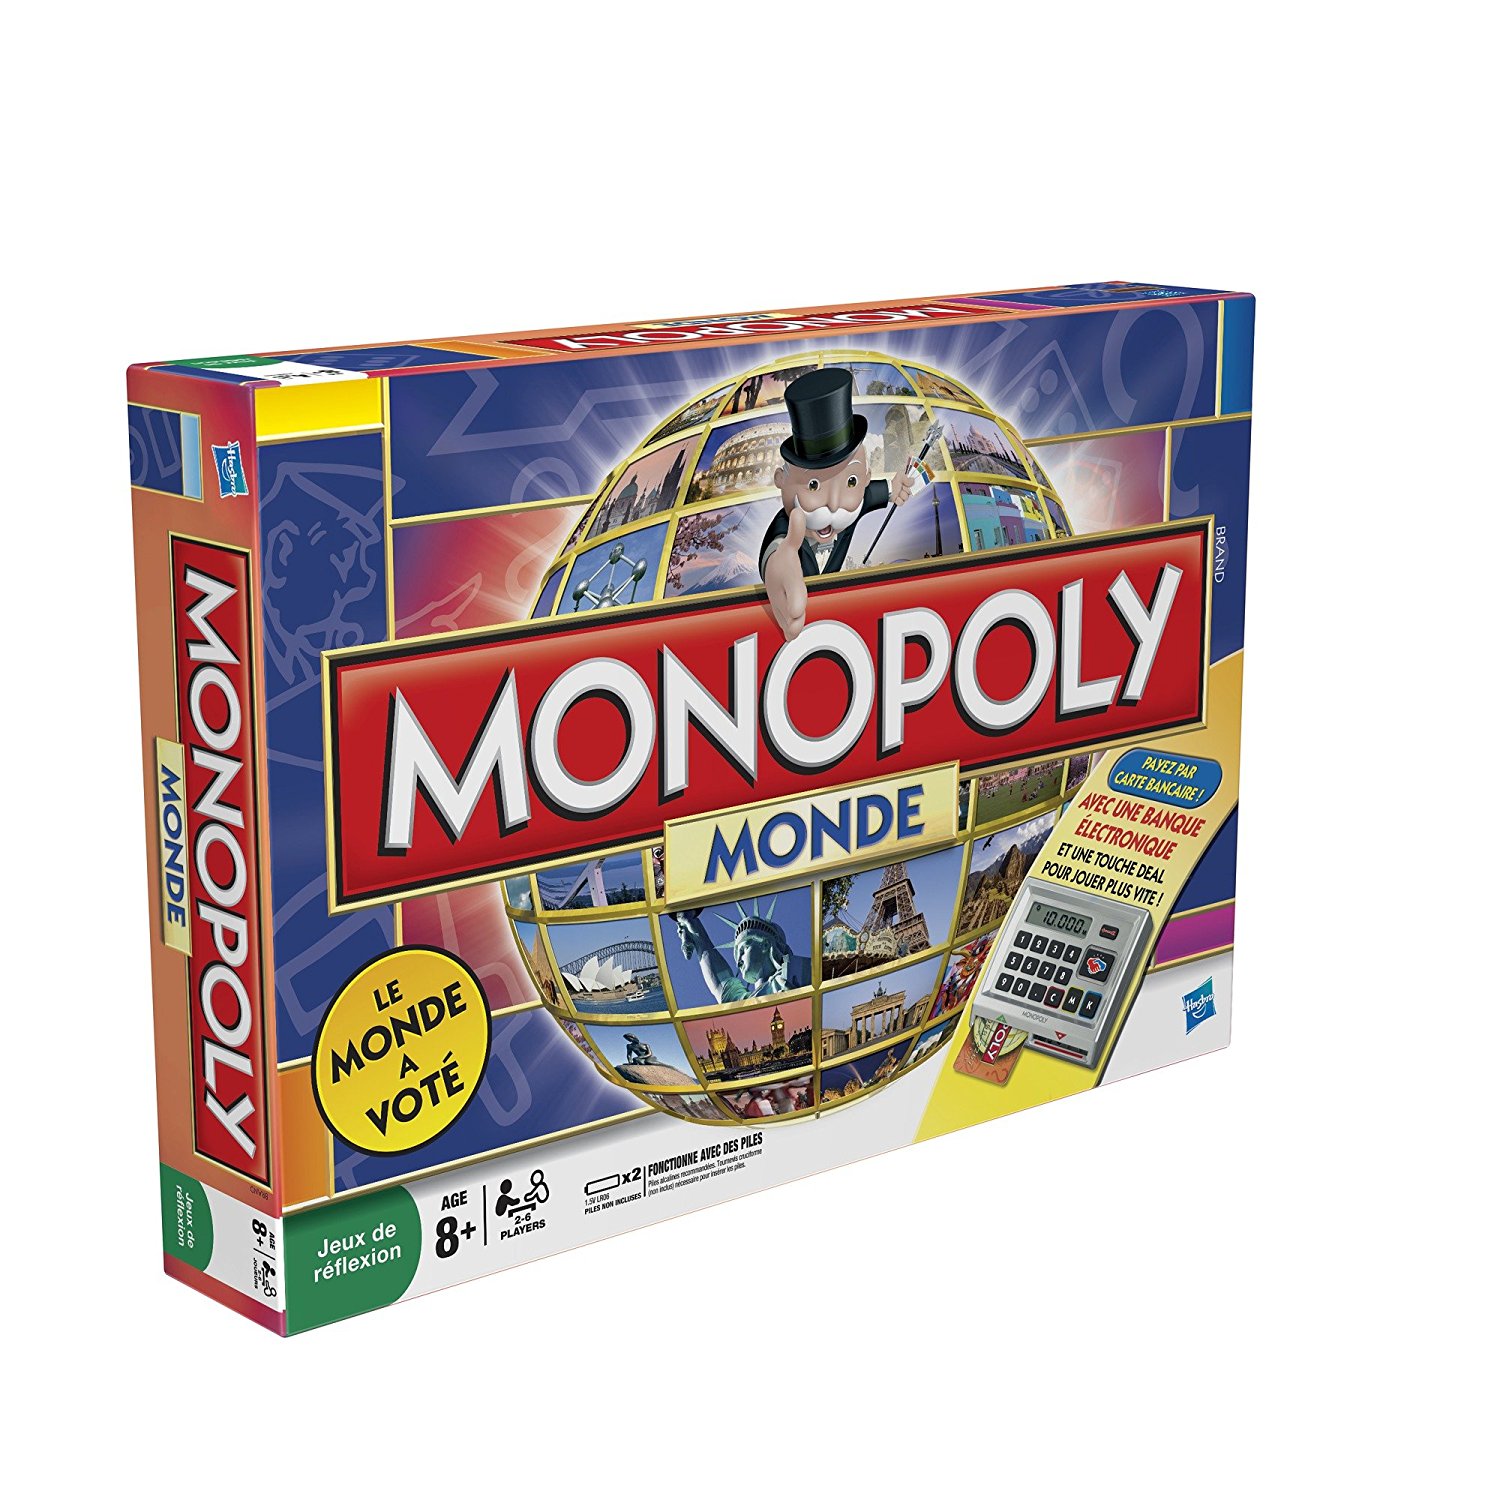 Acheter Monopoly Monde Doccasion Sur Okkazeo Acheter Sur